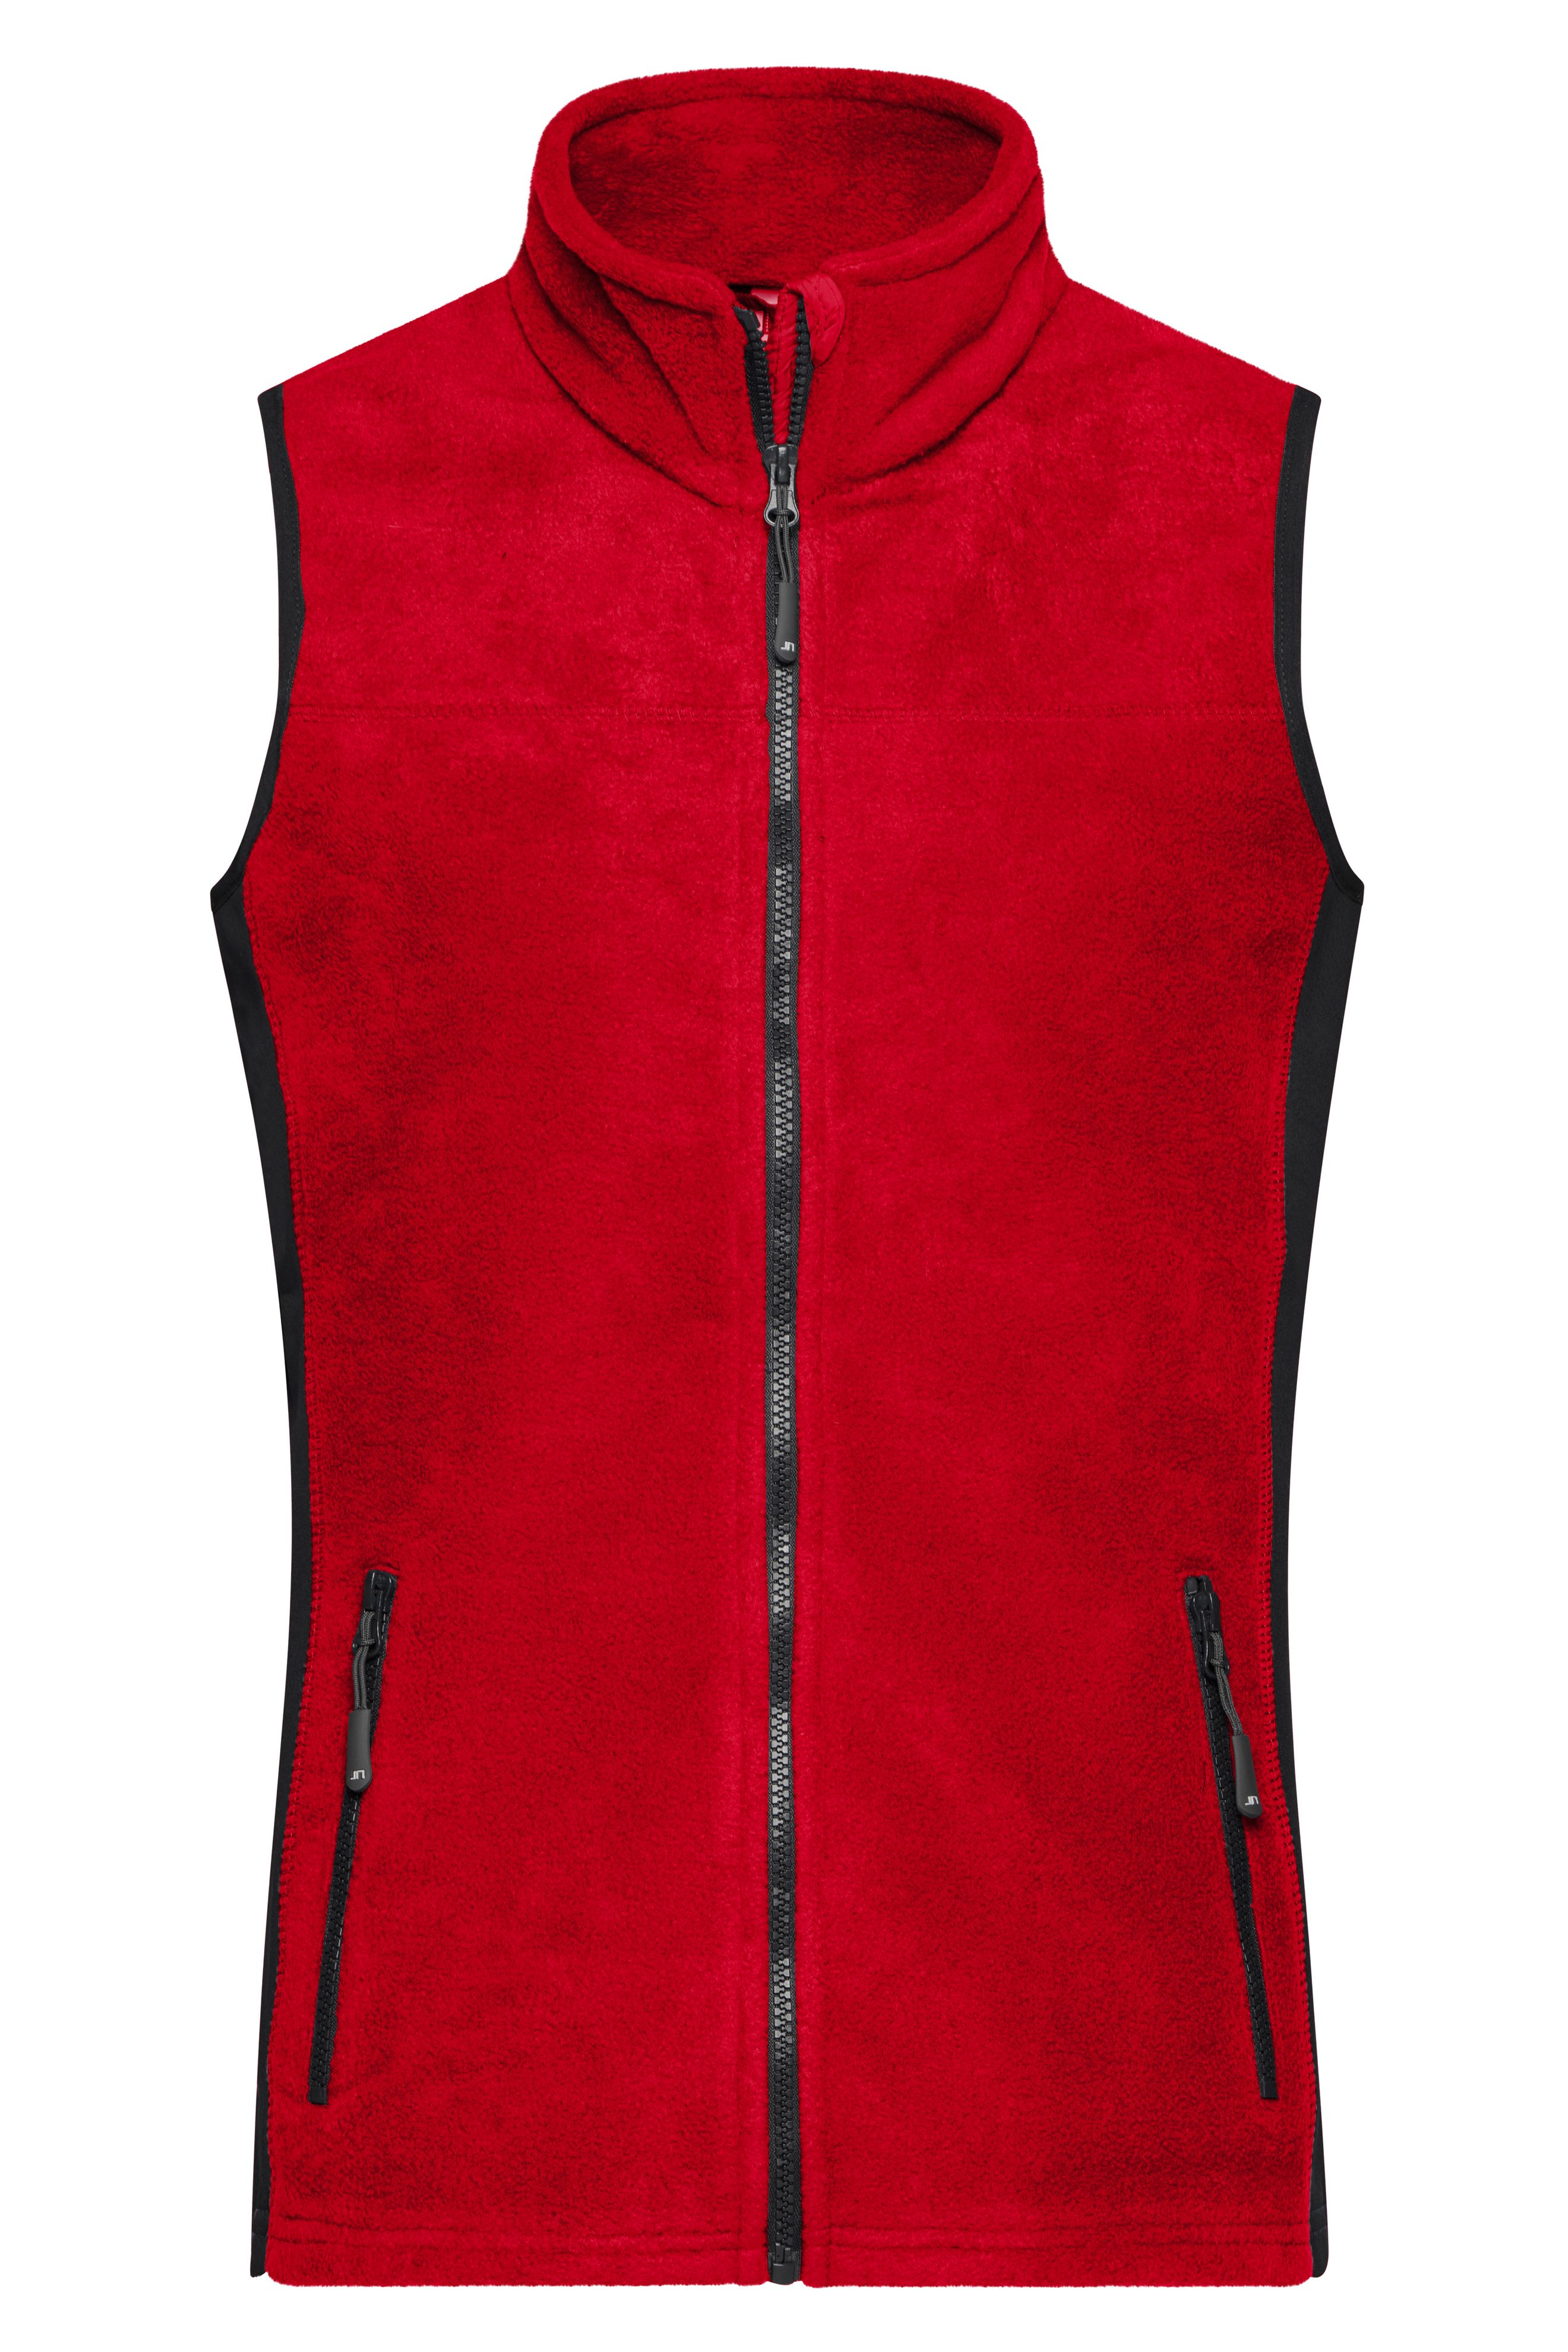 Damen Workwear Fleece Weste James & Nicholson® red/black XL